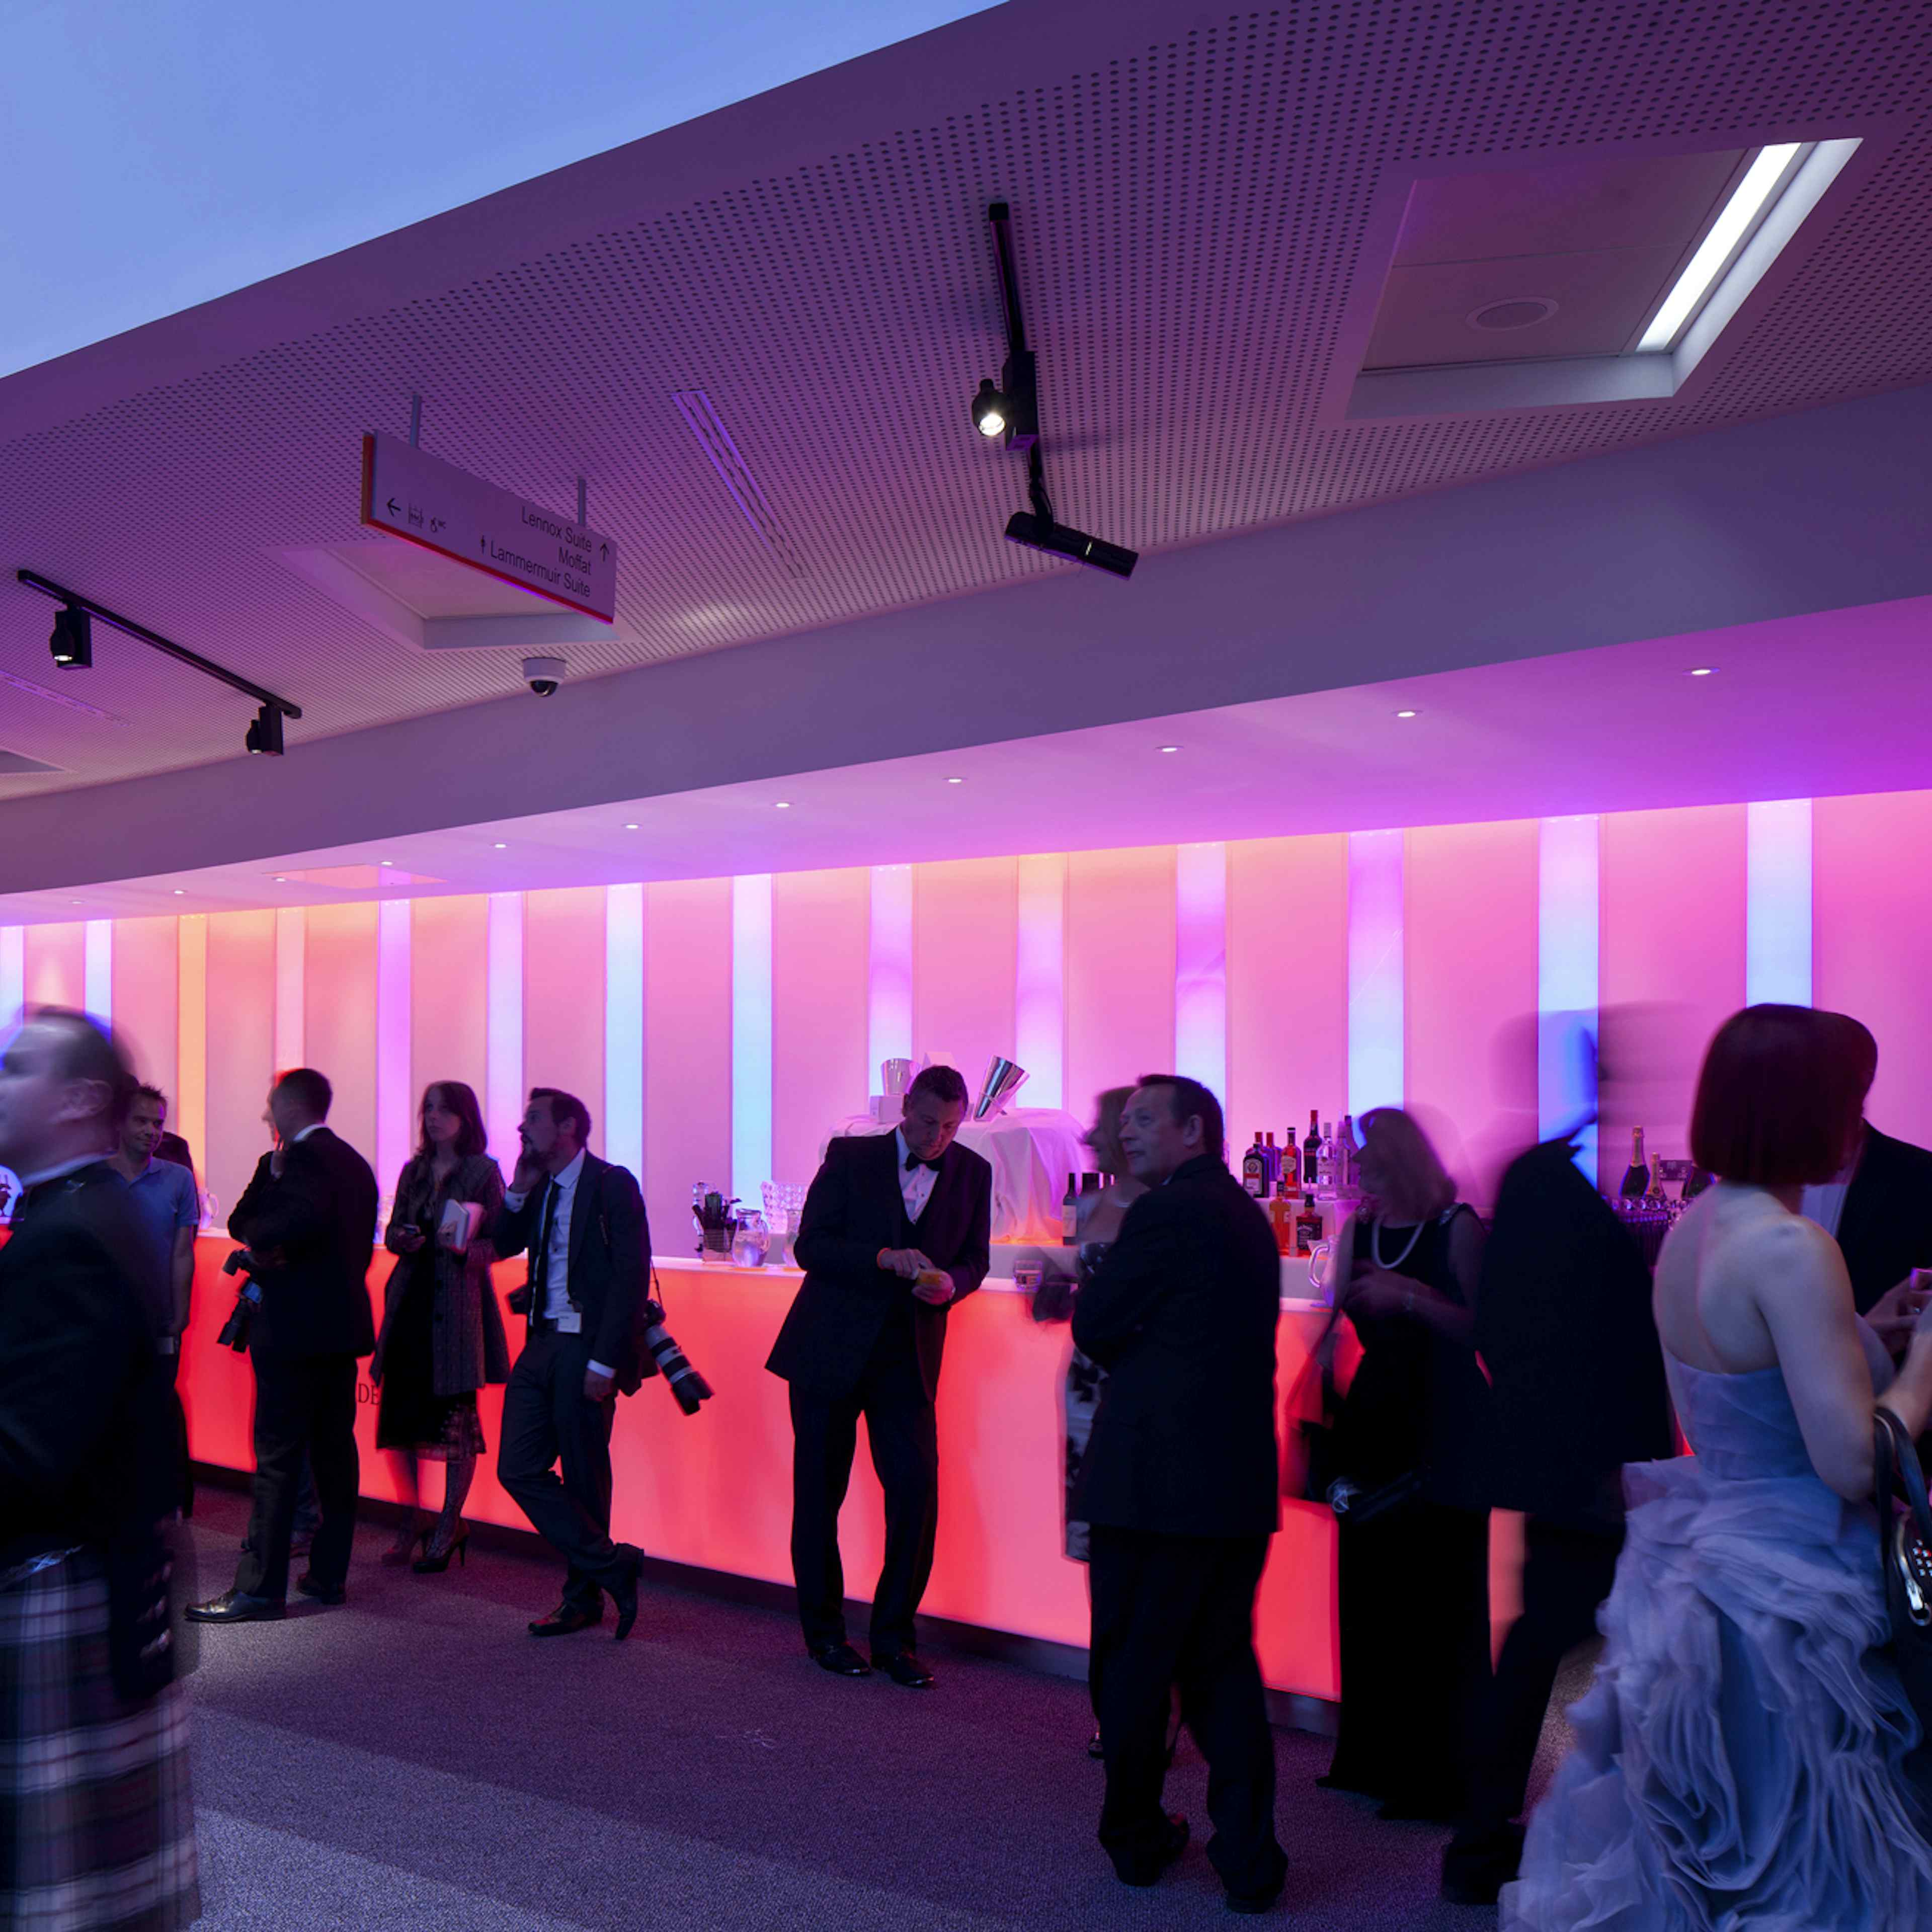 Edinburgh International Conference Centre - Atrium image 3